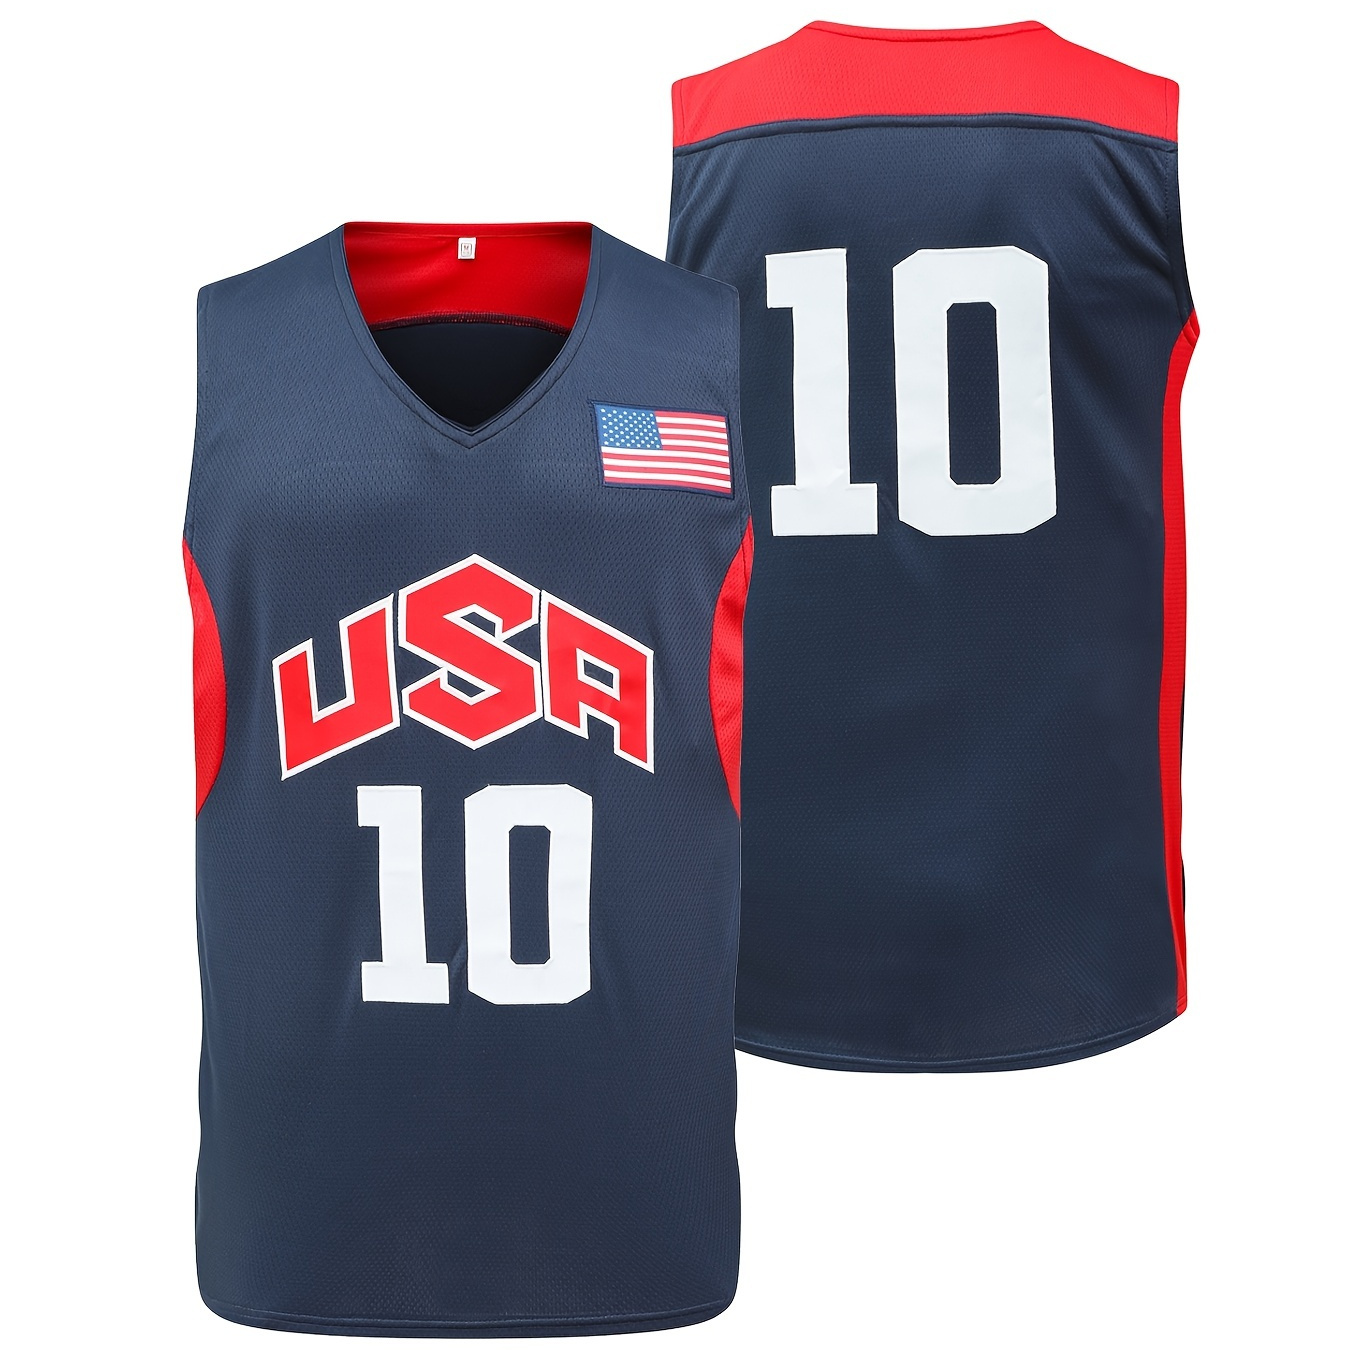 Men's USA #10 Embroidered Basketball Jersey, Active Retro V Neck Sleeveless Uniform Basketball Shirt for Training Competition S-XXXL,Temu